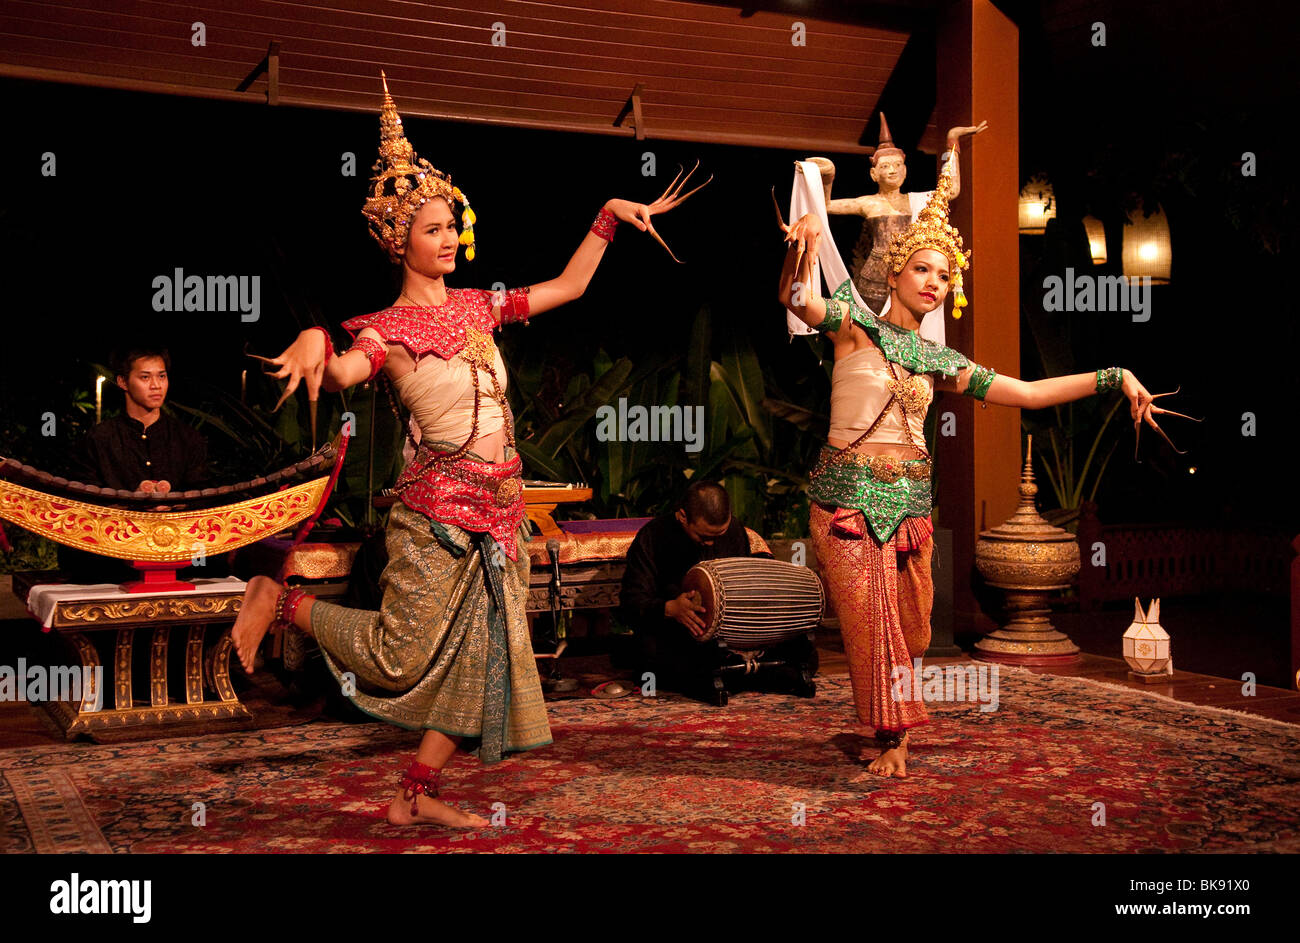 Traditionellen Lanna-Tanz-Performance im Le Grand Lanna Restaurant Mandarin Oriental Dhara Dhevi Hotel, Chiang Mai, Thailand. Stockfoto